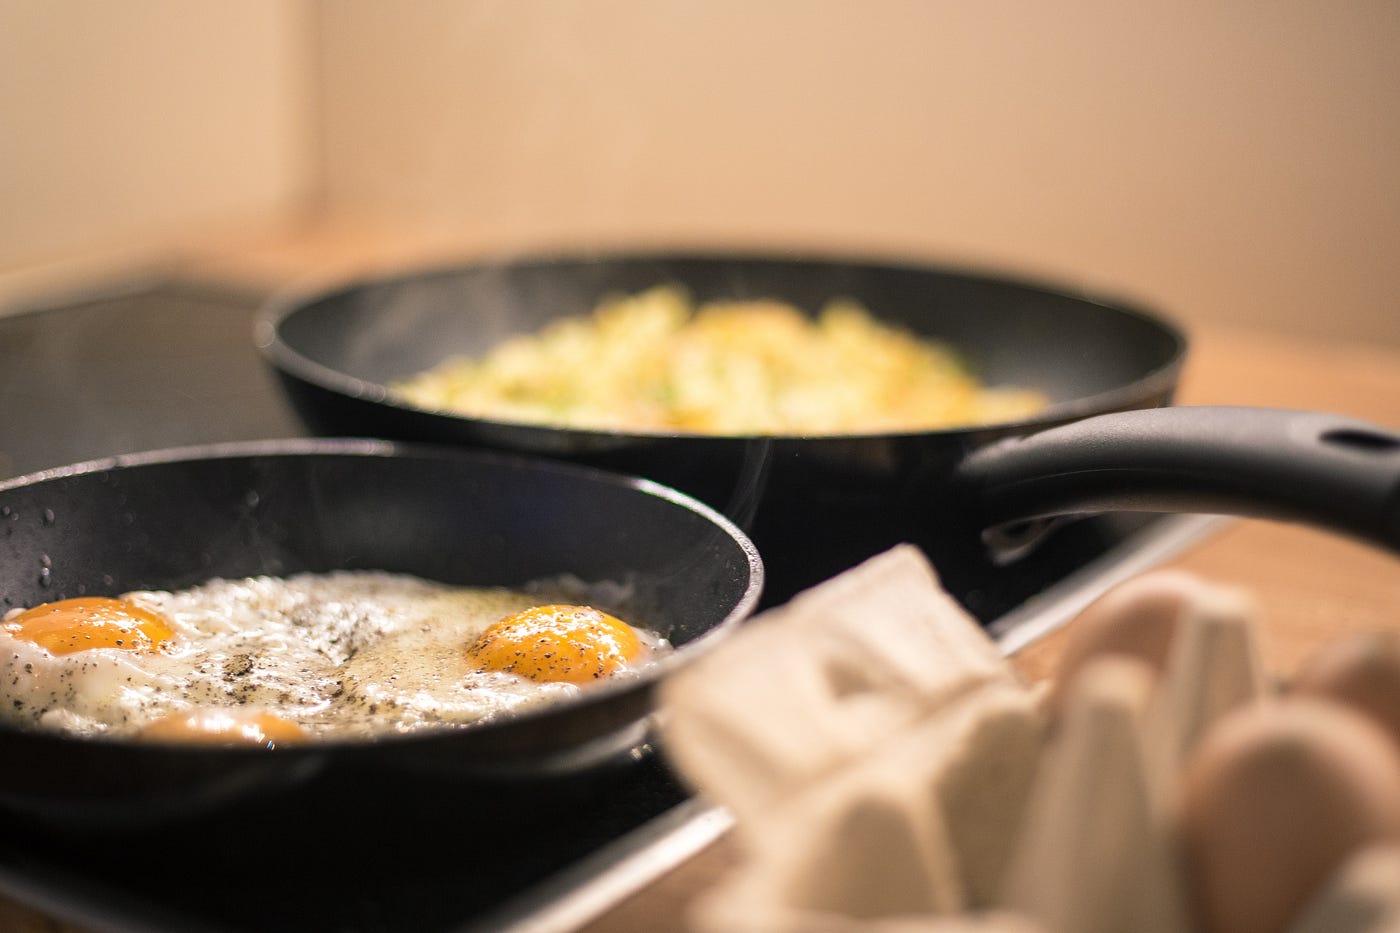 2/4-hole Egg Pan Portable Non-stick Pan Household Kitchen Frying